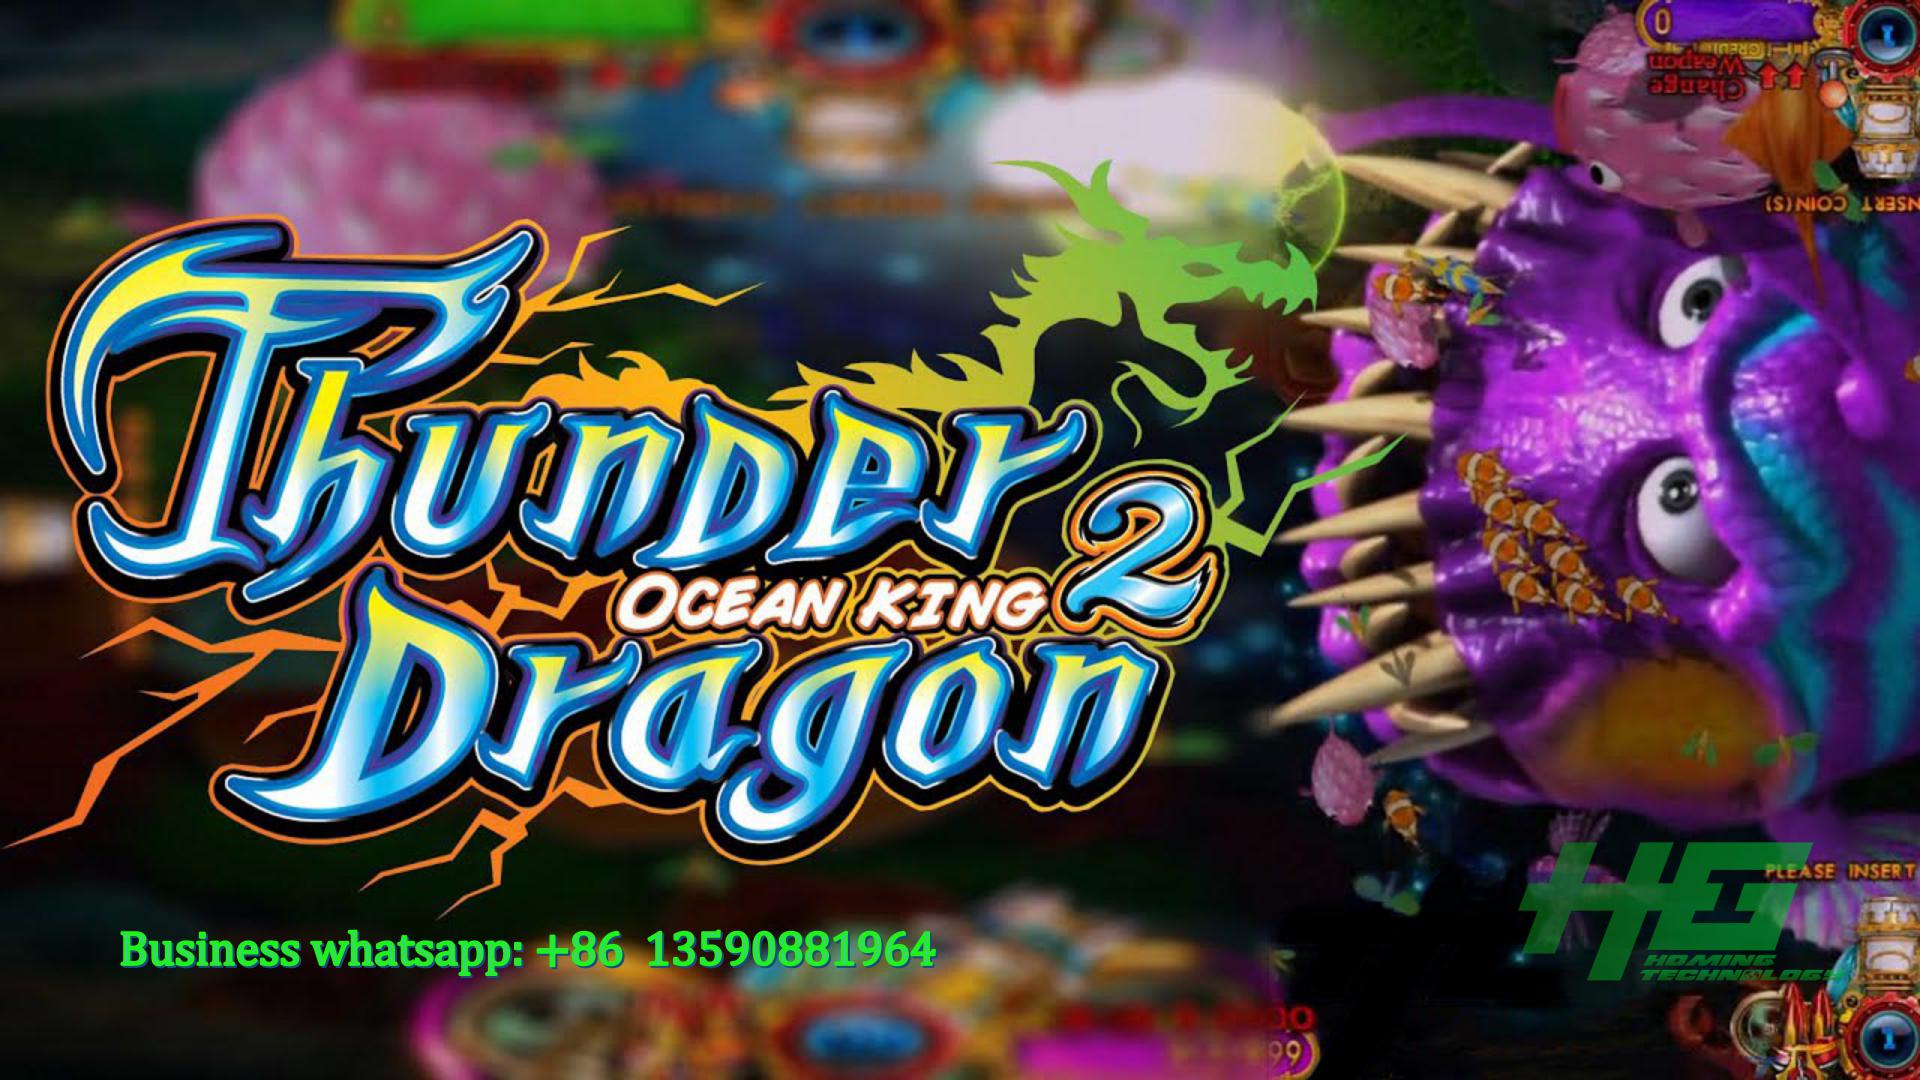 IGS Original Thunder Dragon Fishing Game,Ocean King 2 Thunder Dragon Fish Hunter Game Machine Demo